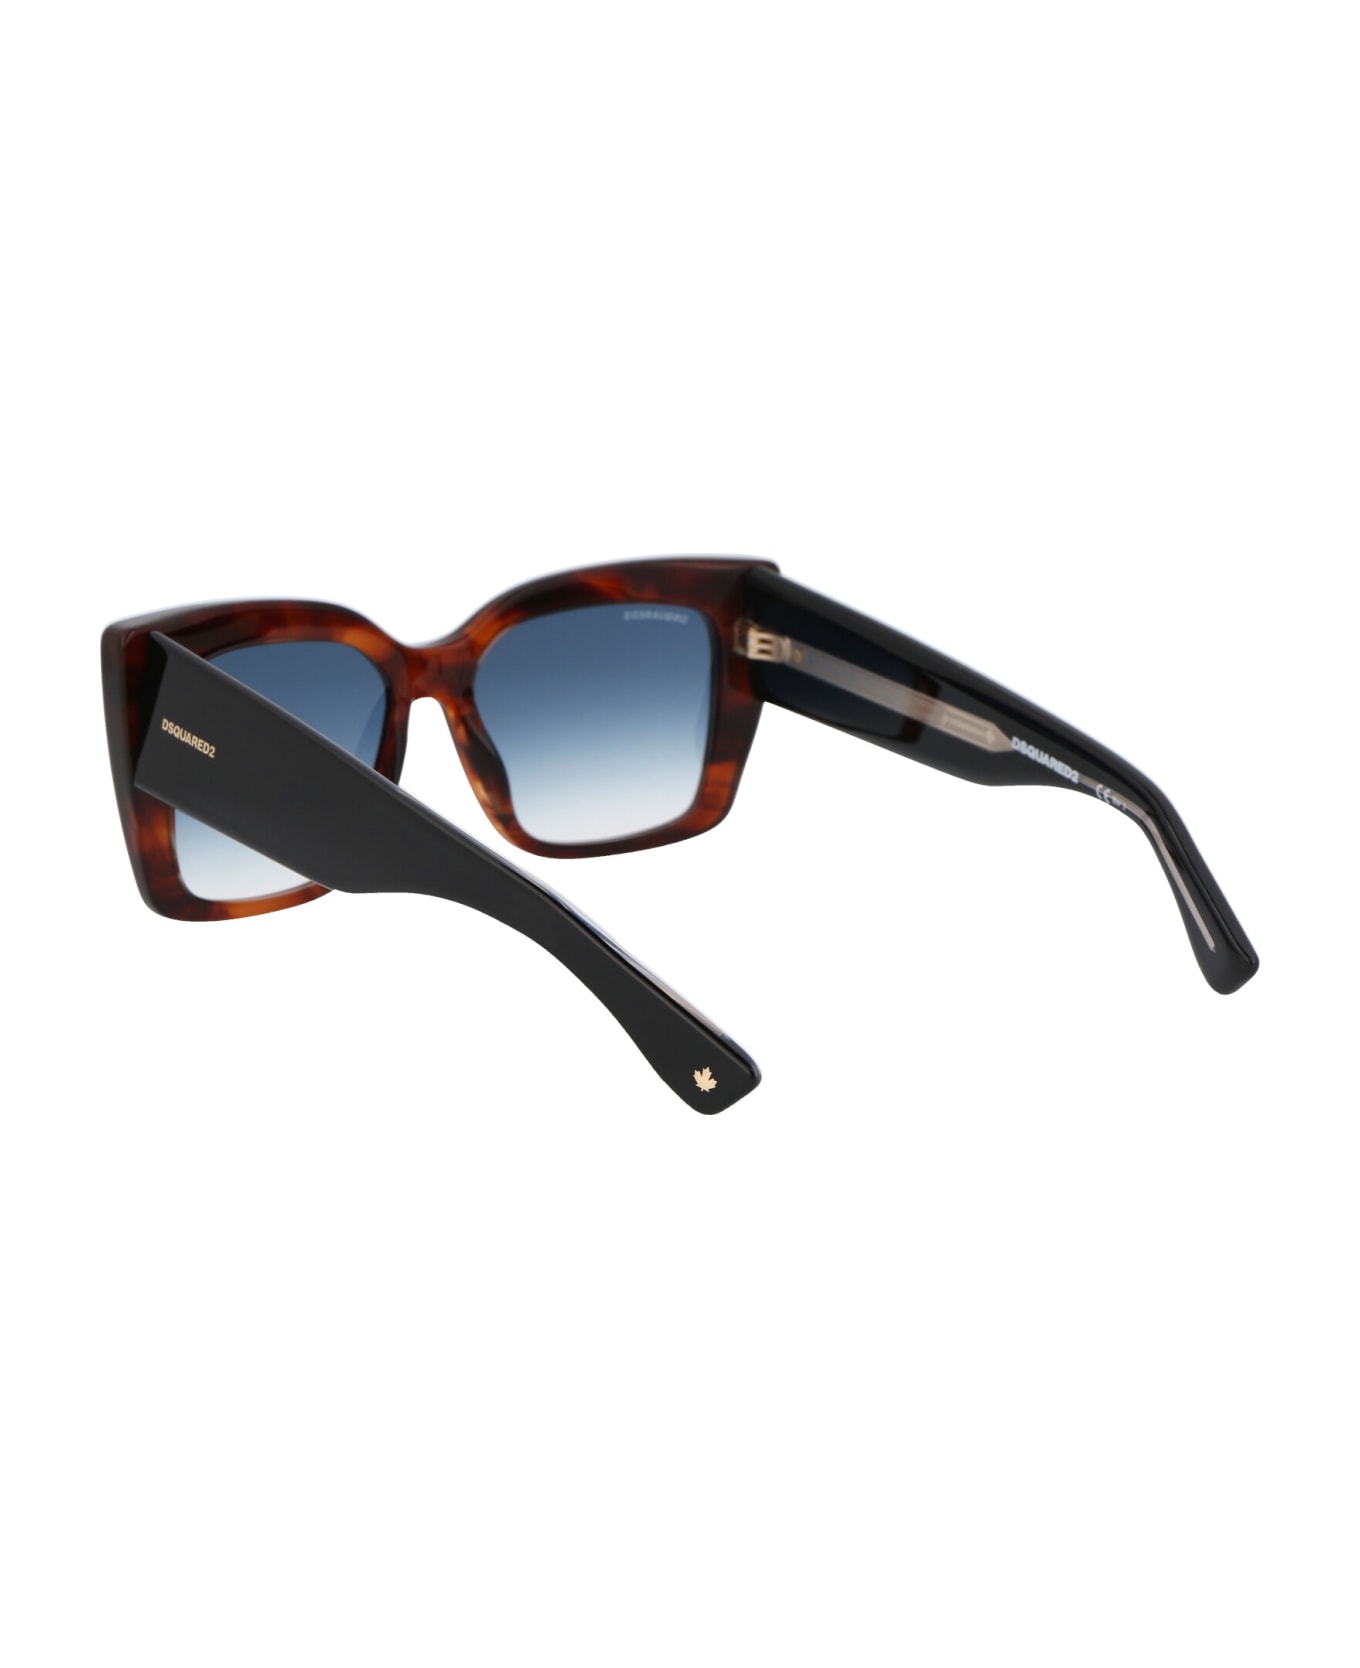 Dsquared2 Eyewear D2 0017/s Sunglasses - EX408 BROWN HORN サングラス